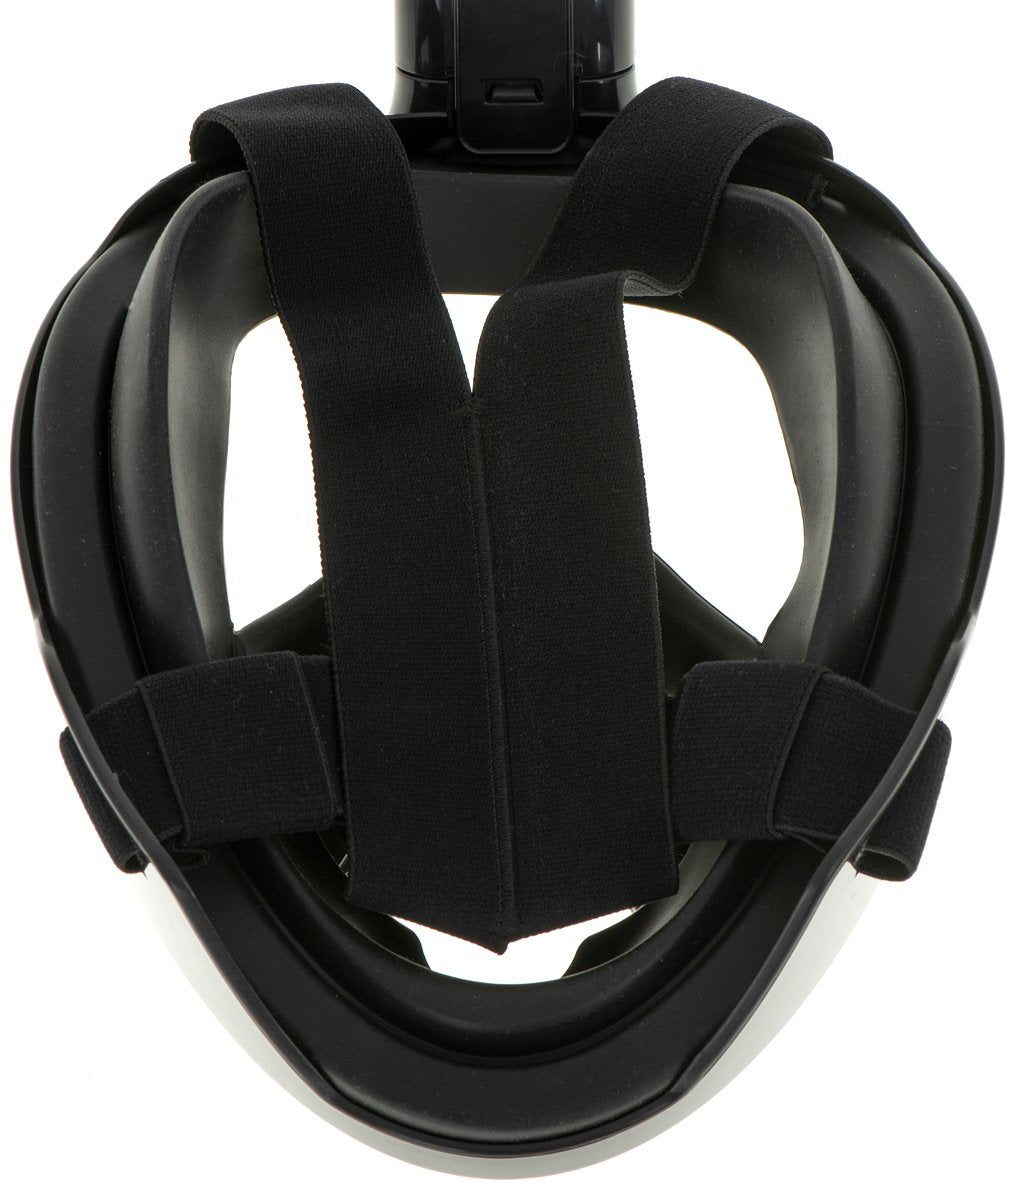 Full Face Mask met Snorkelmasker (Zwart, GoPro houder)